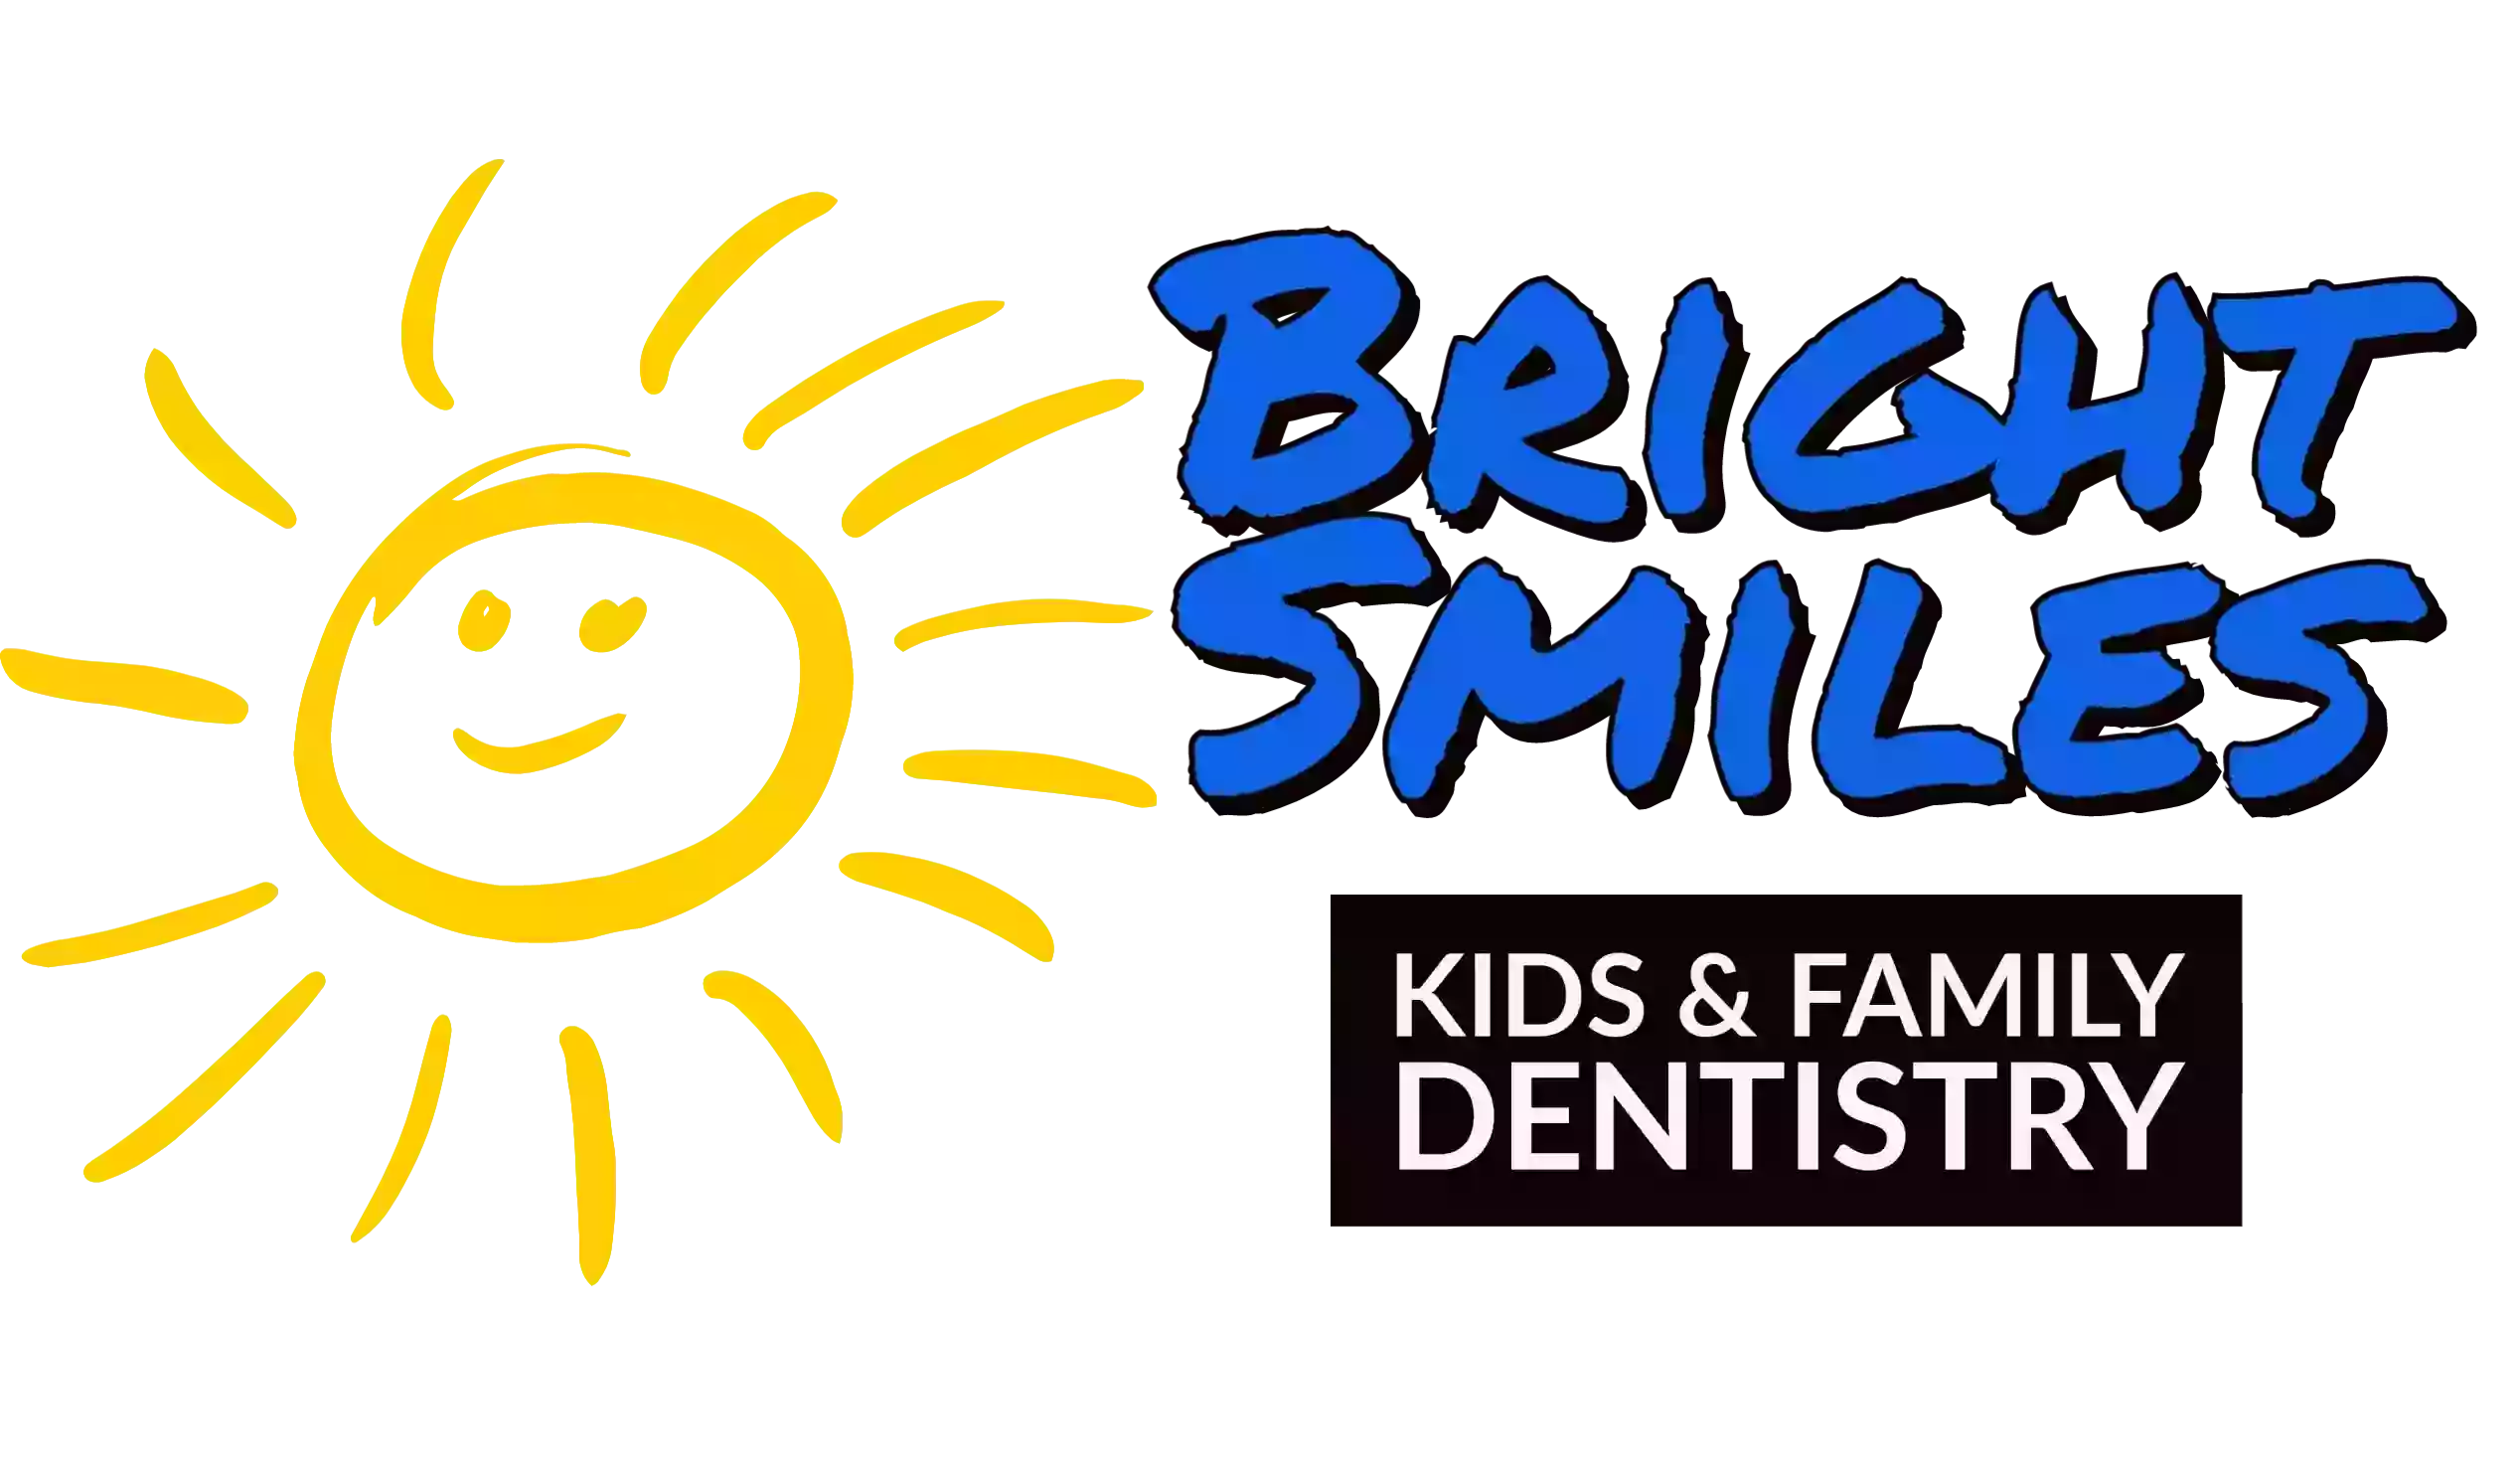 Bright Smiles Dental, Kids & Family Dentistry